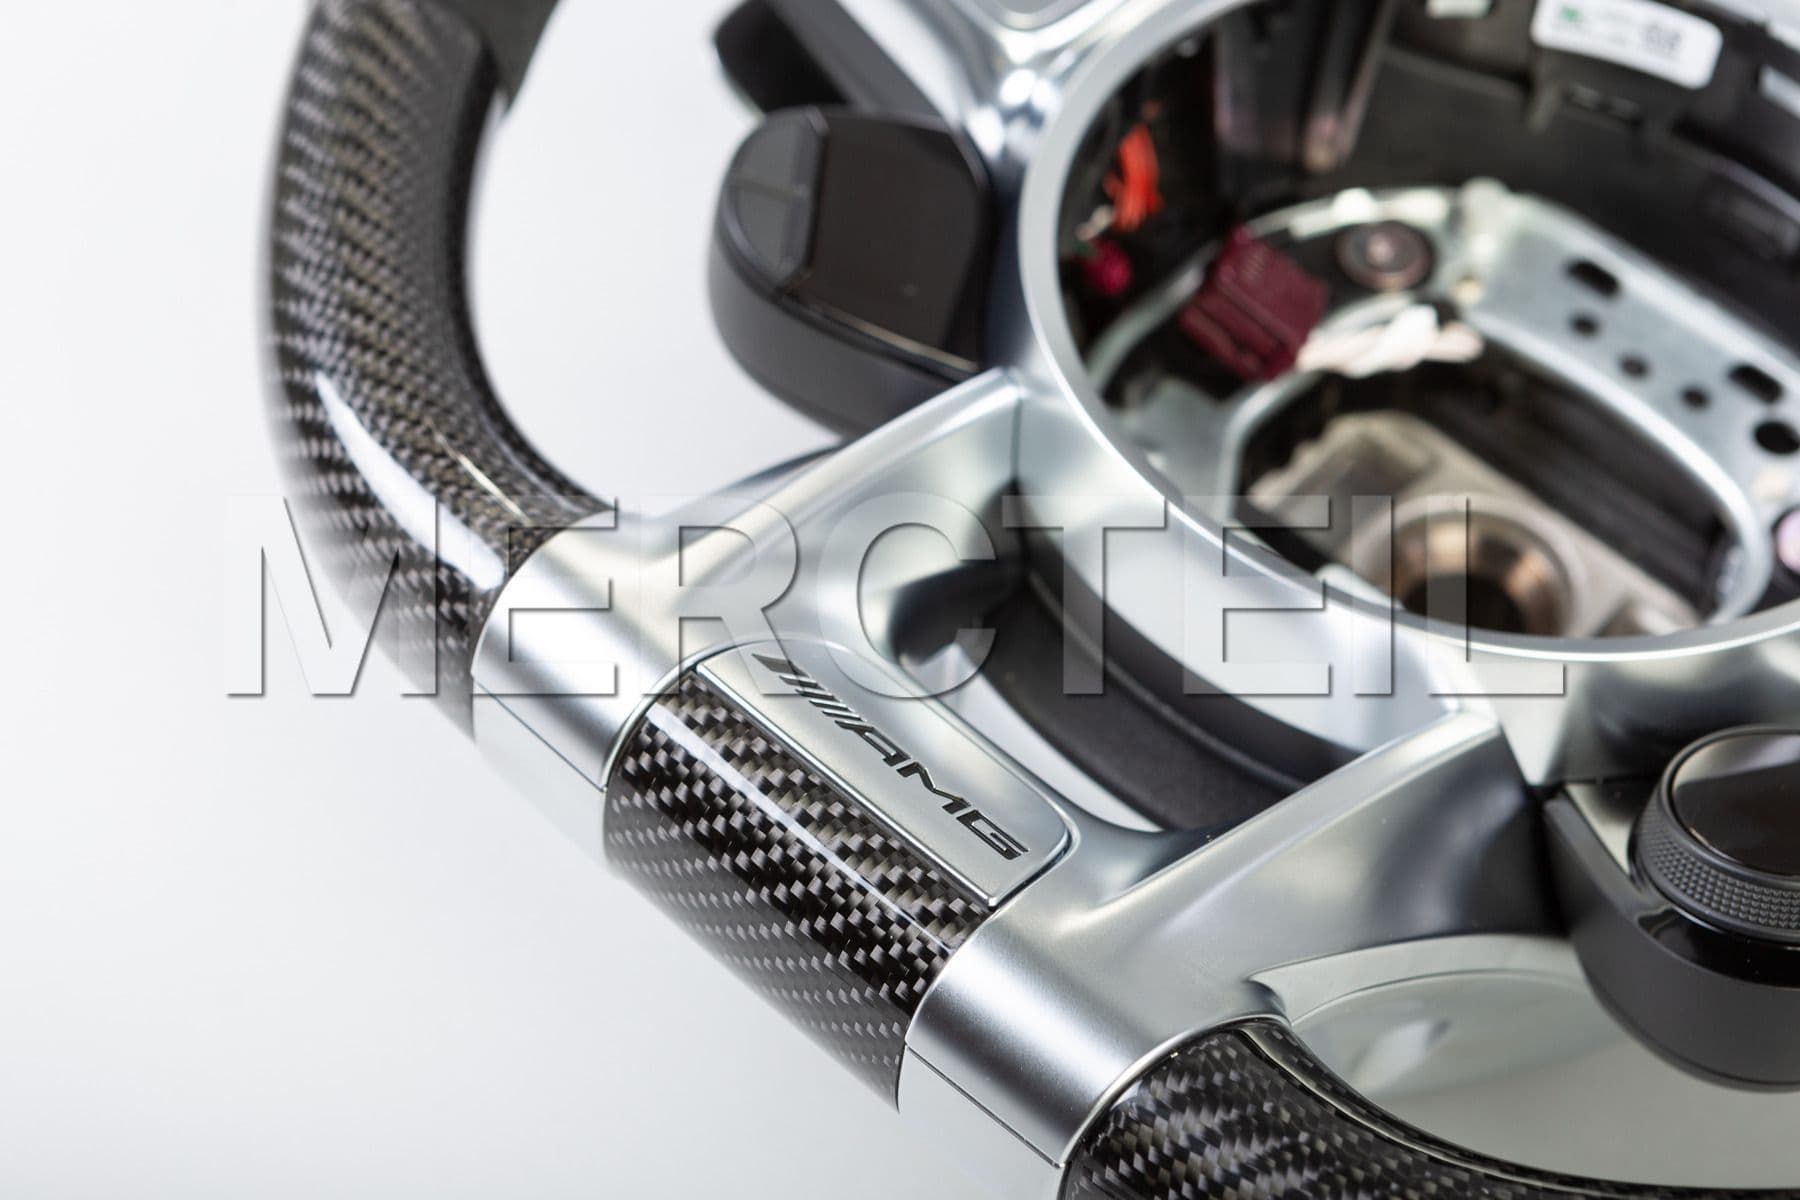 AMG Carbon Fiber Steering Wheel; A0004605809 9E38; AMG GT C190.